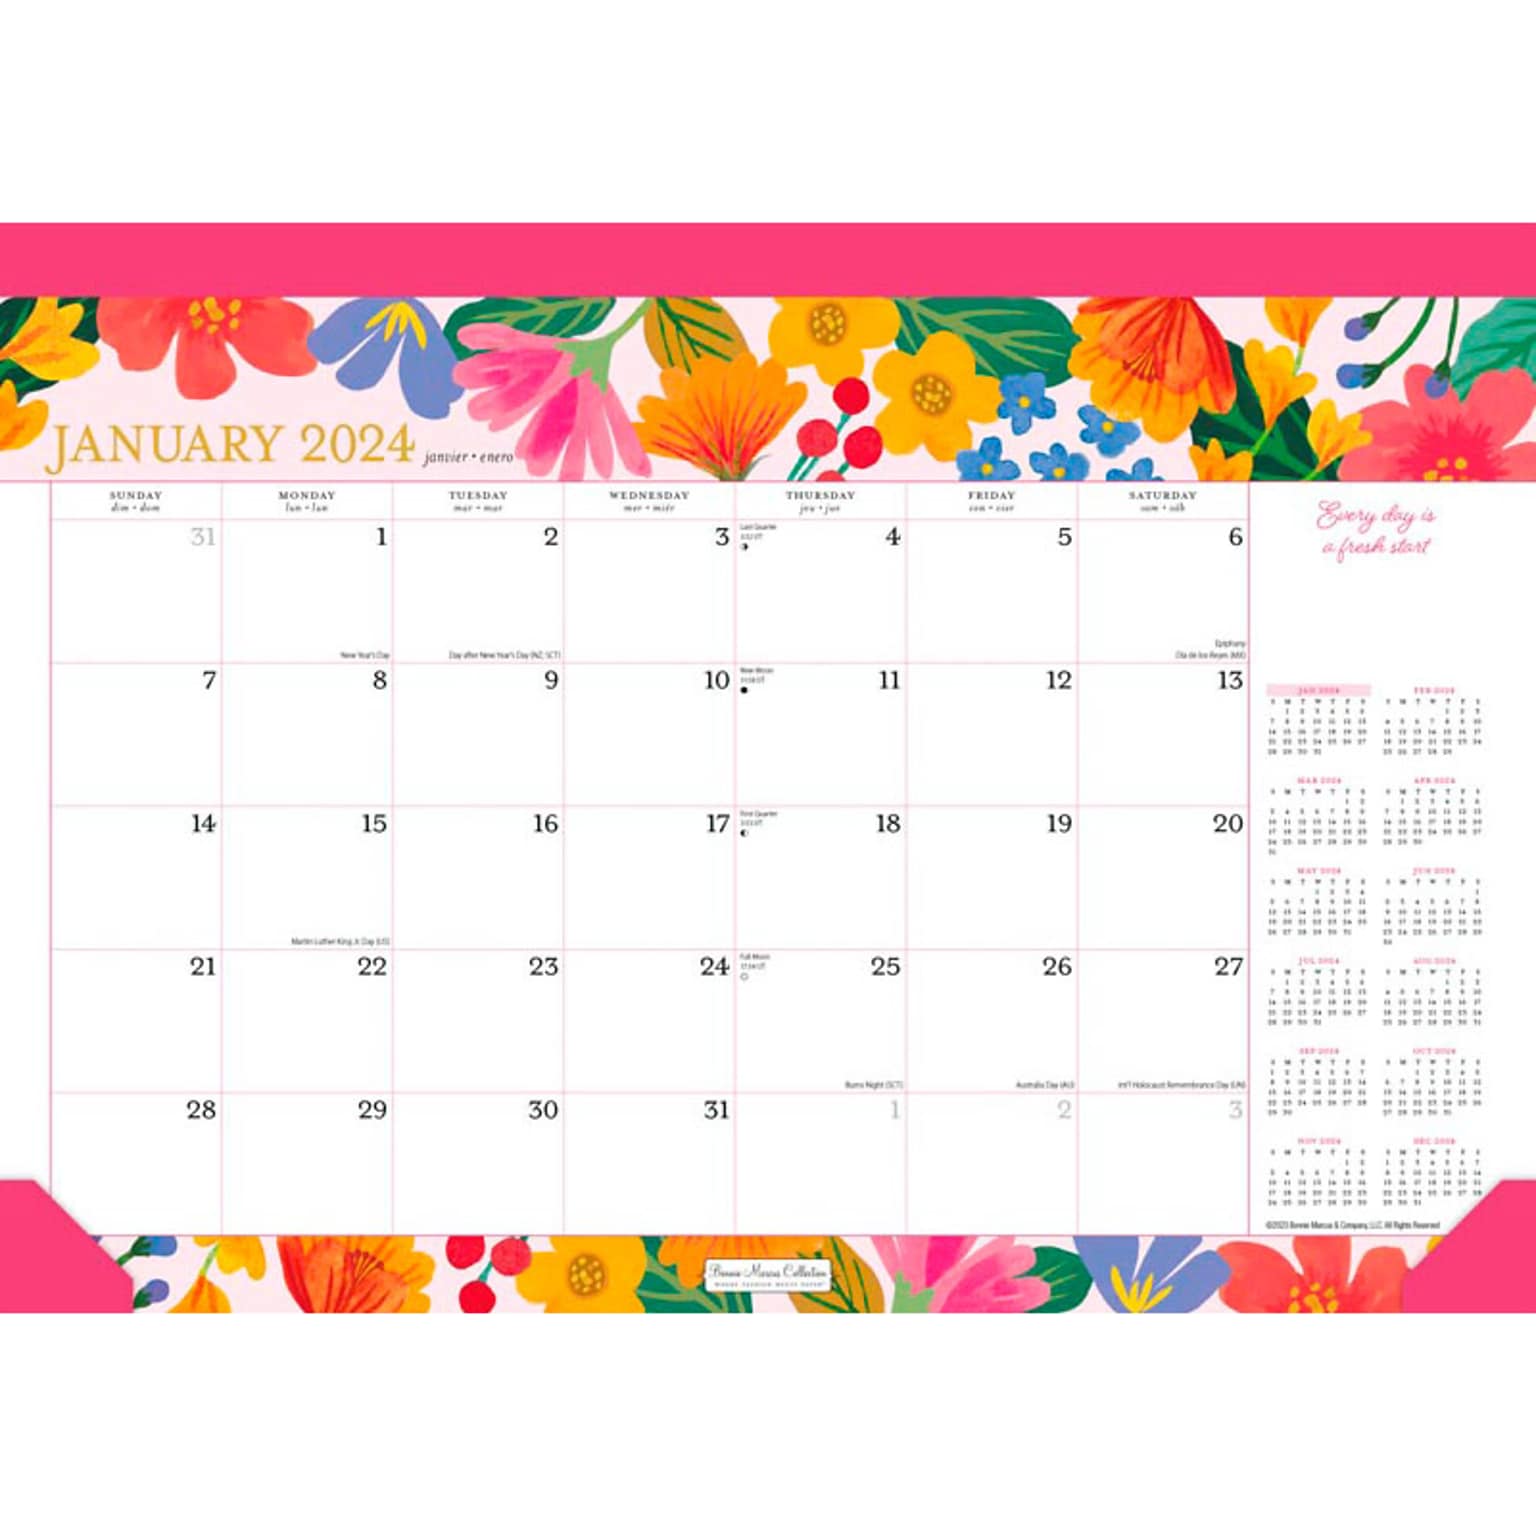 2023-2024 Plato Bonnie Marcus 15.5 x 11 Academic & Calendar Monthly Desk Pad Calendar (9781975457341)